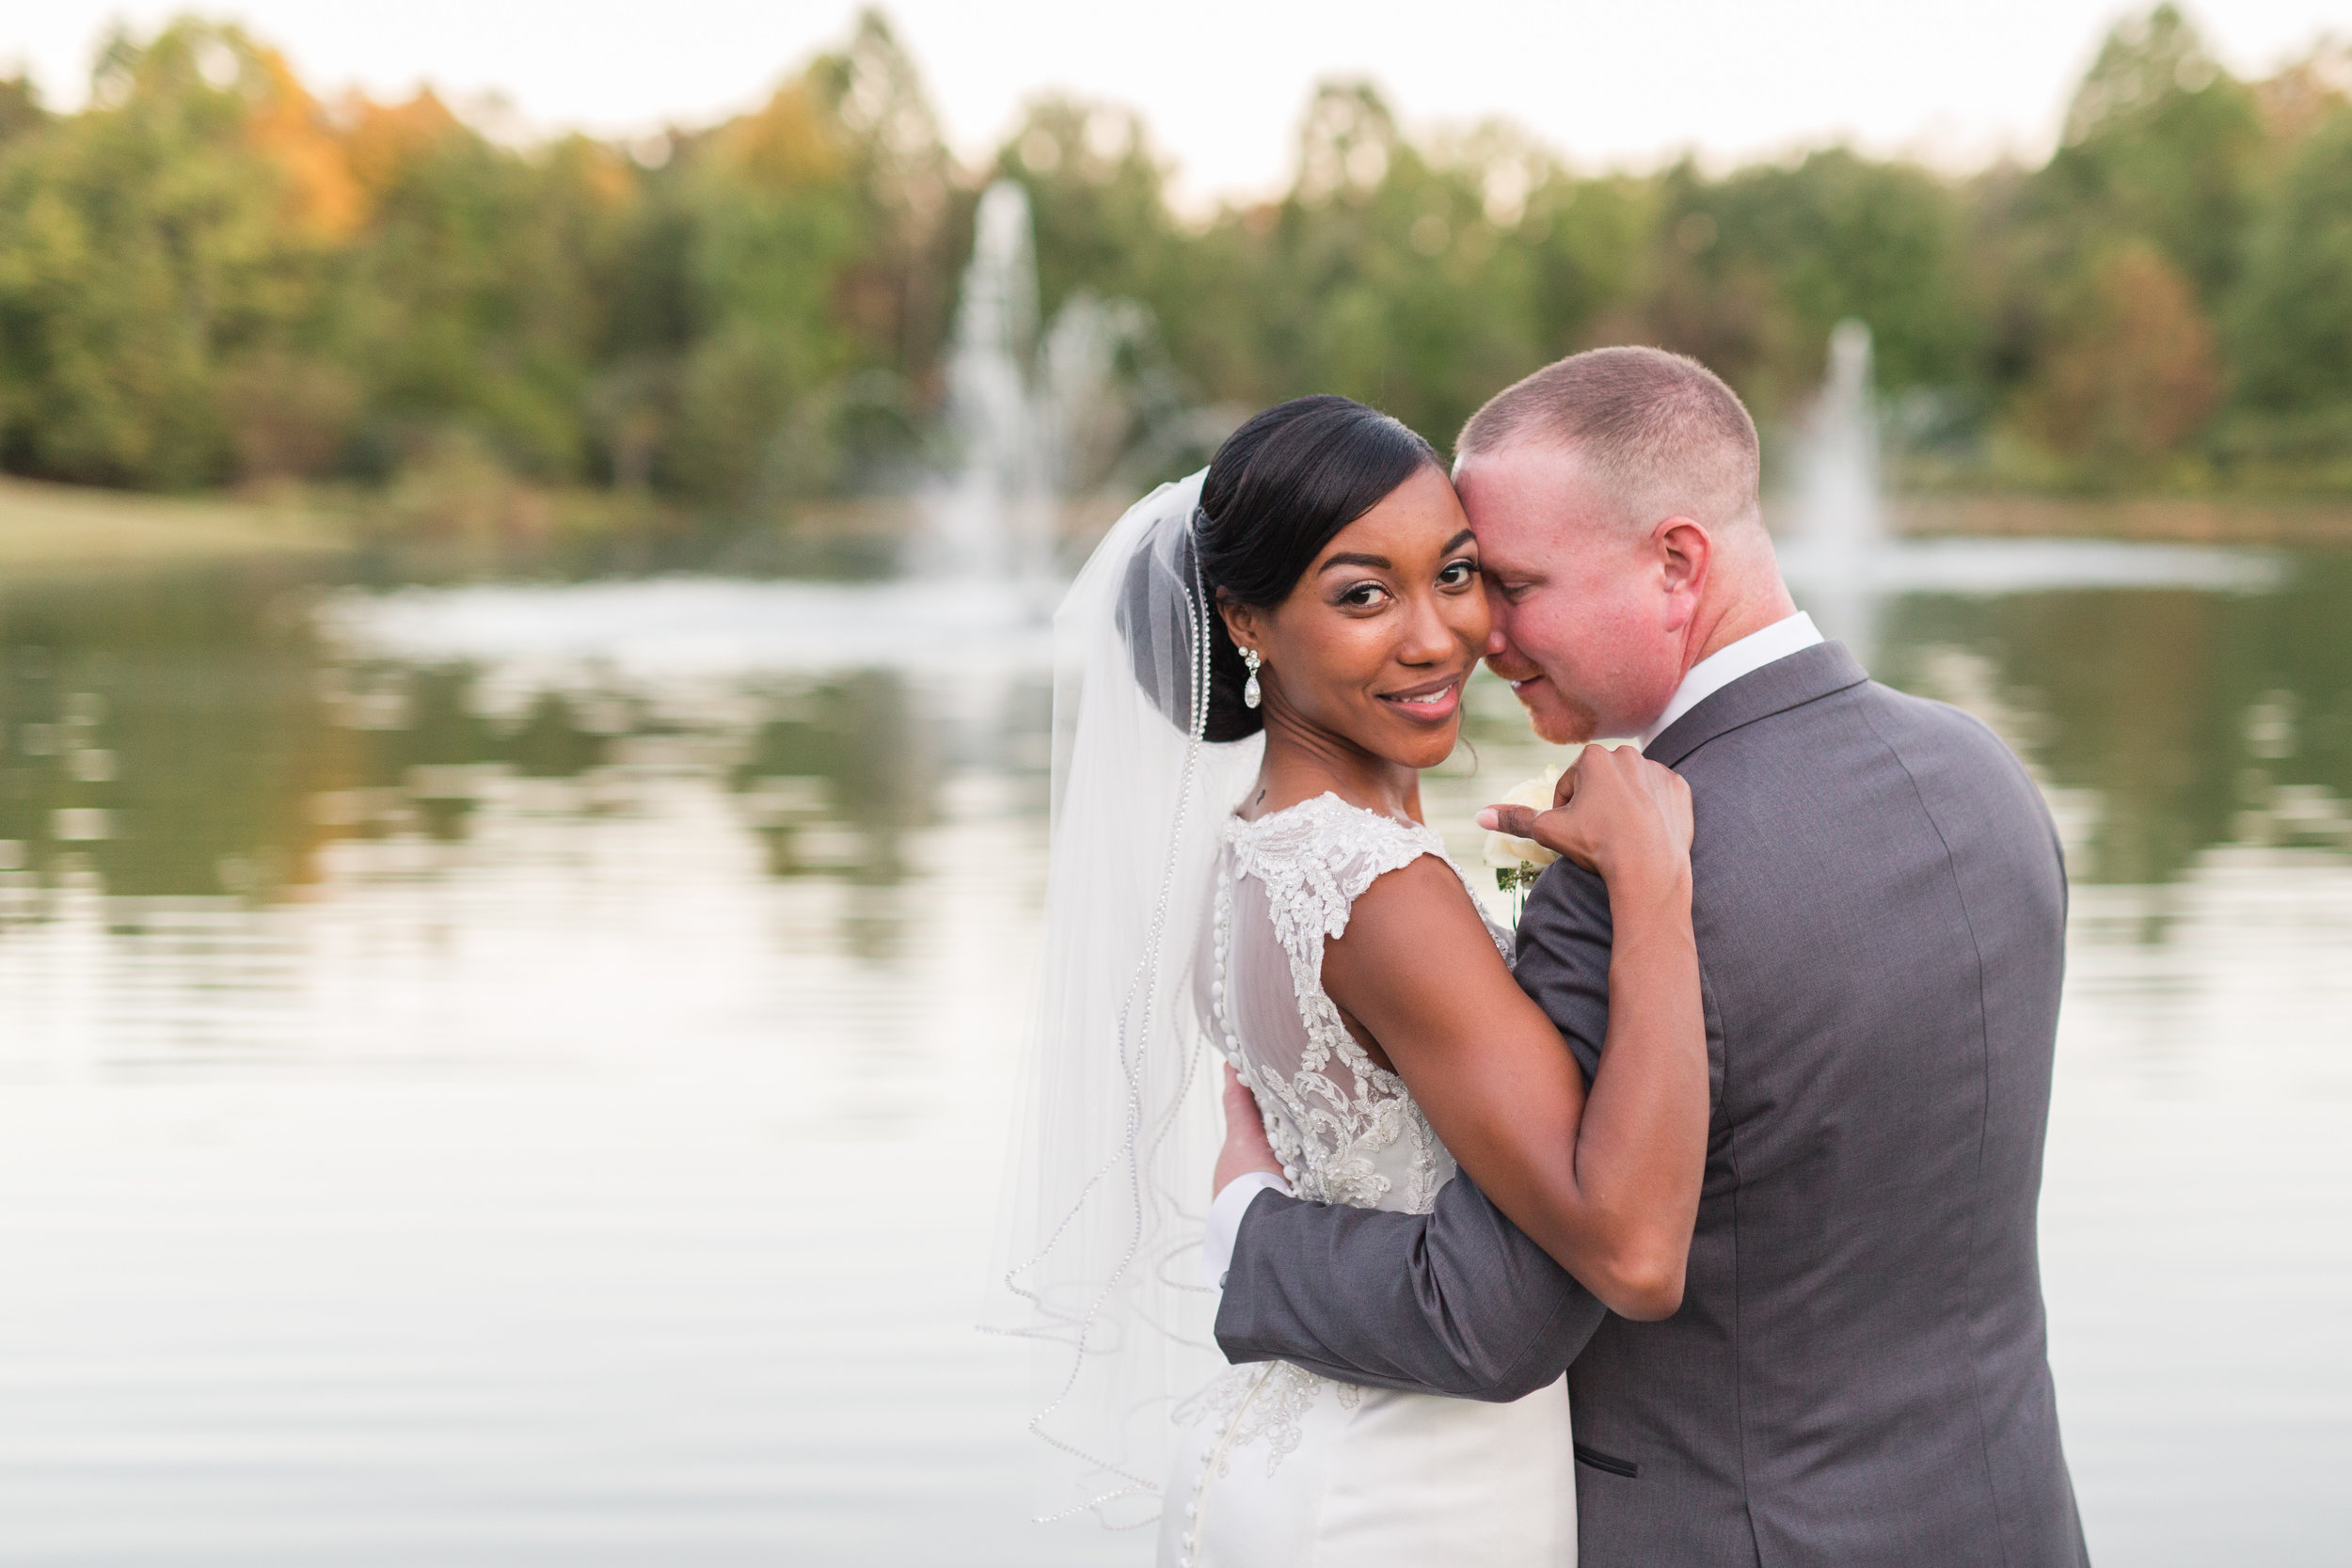 Keswick Vineyard and Trivium Estate Wedding Photographer || Charlottesville and Central Virginia Wedding Photographer || www.ashleyeiban.com 